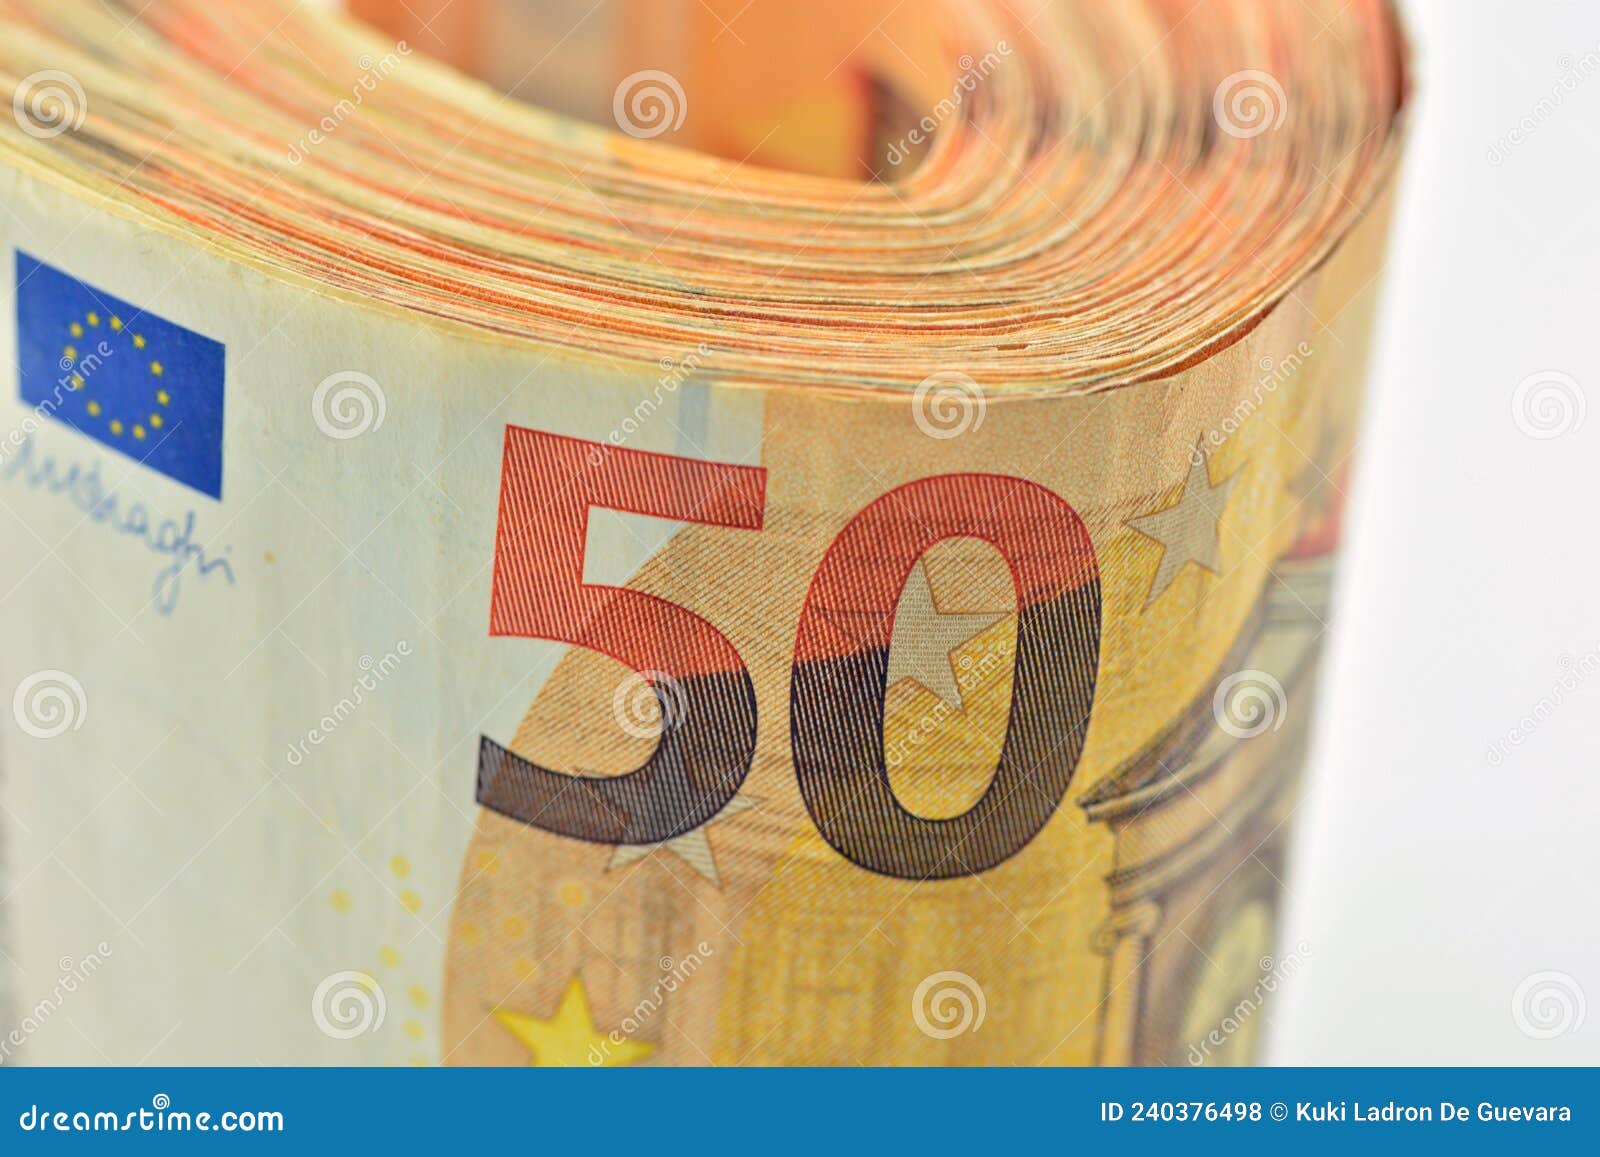 bundles of 50 euro banknotes,  on white